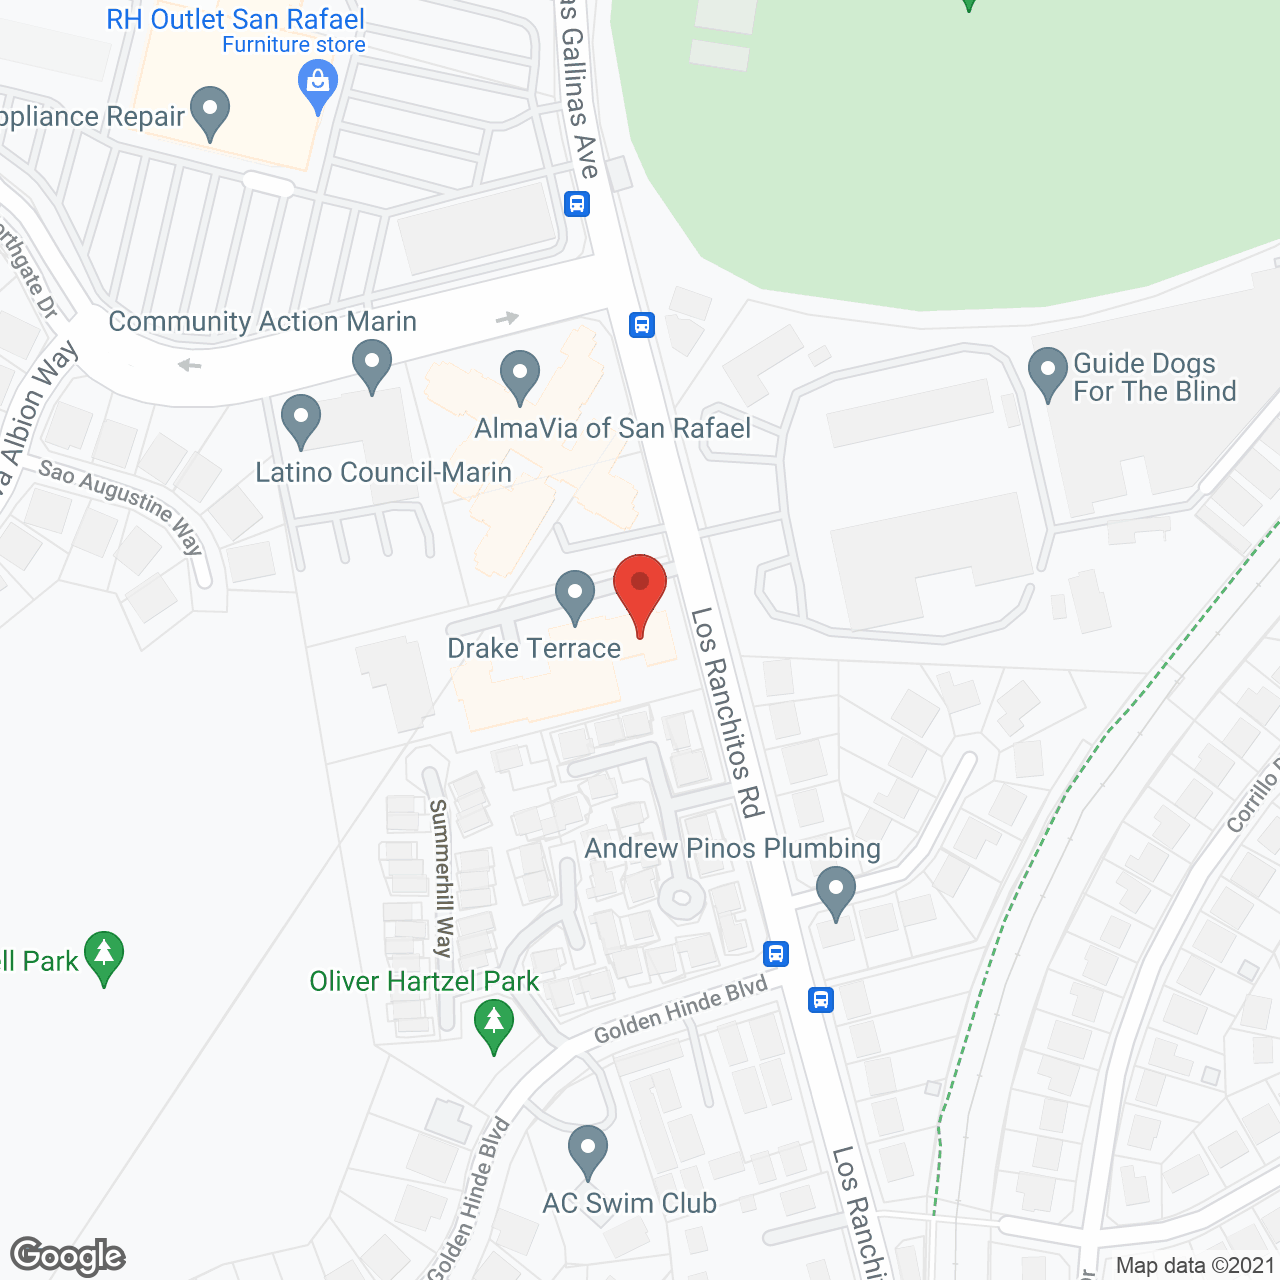 Drake Terrace in google map